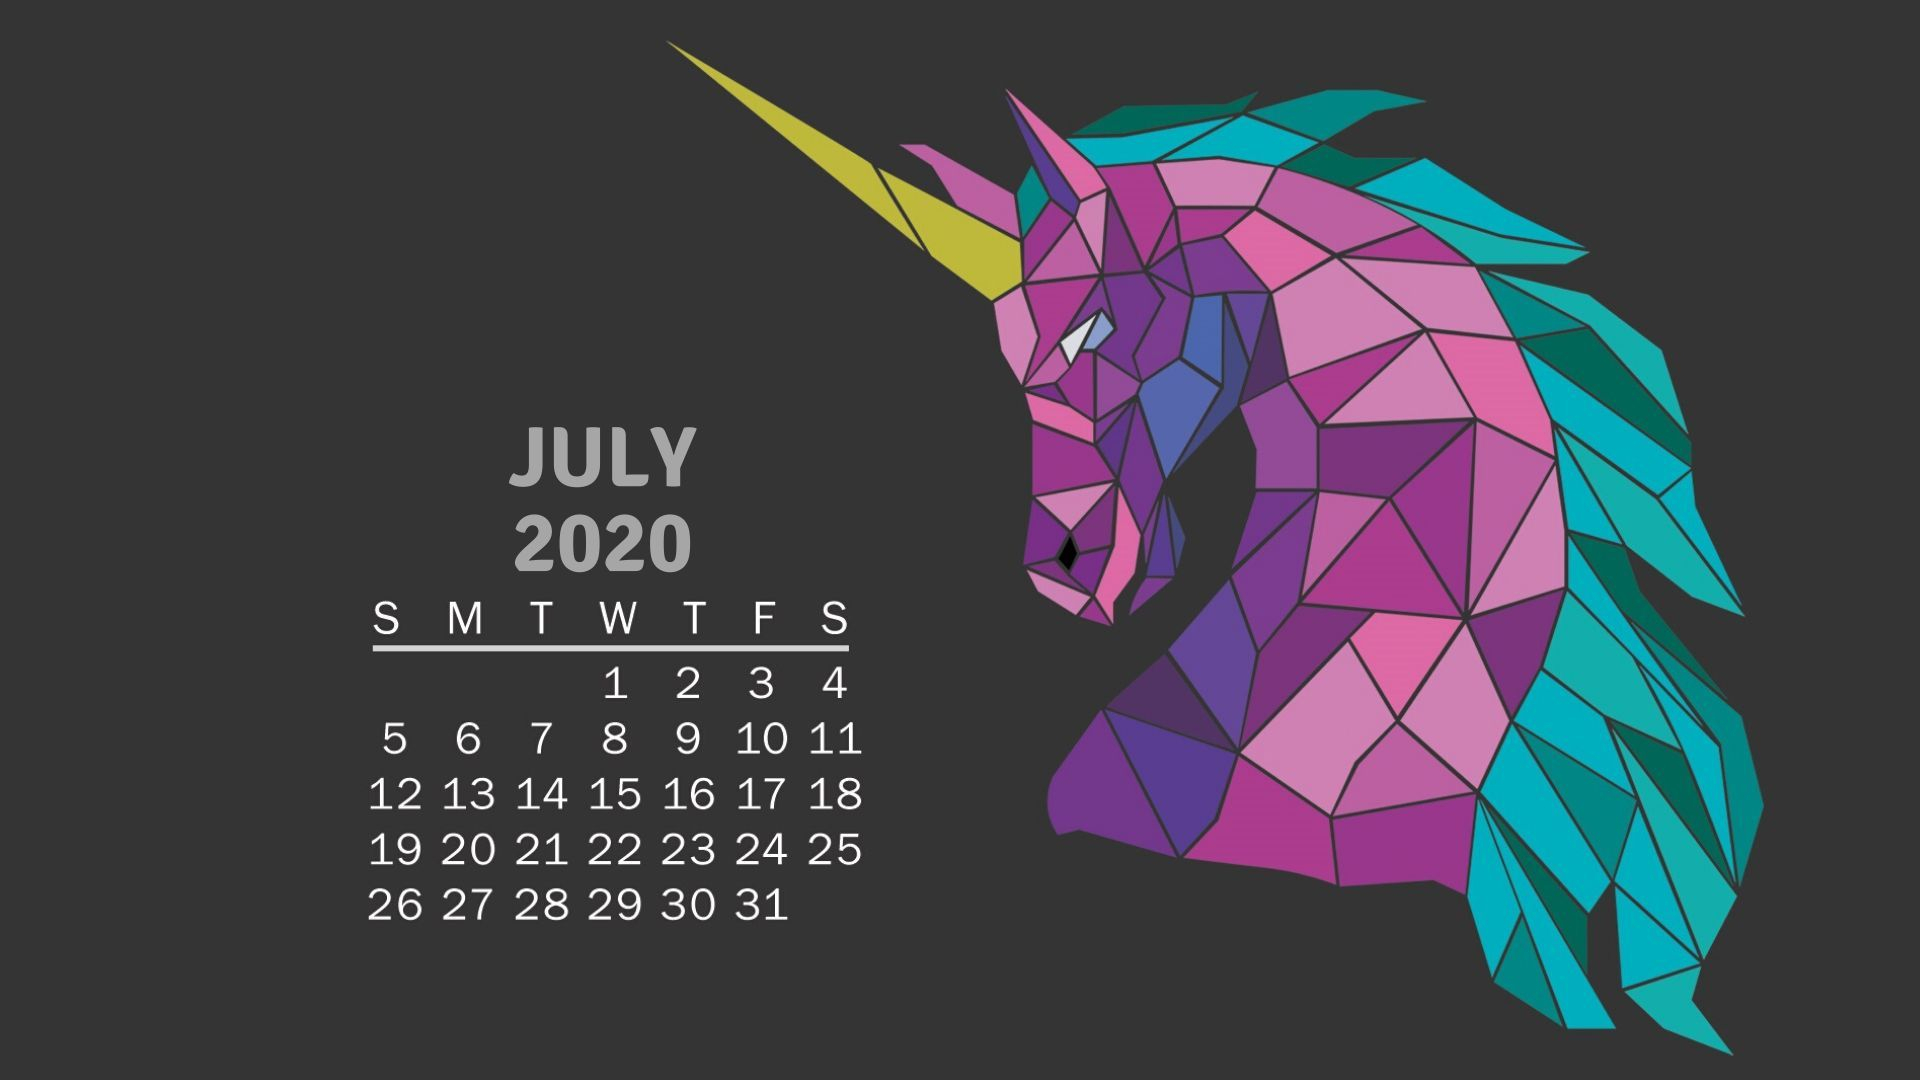 July 2020 Unicorn Calendar Wallpaper In 2020 | Calendar